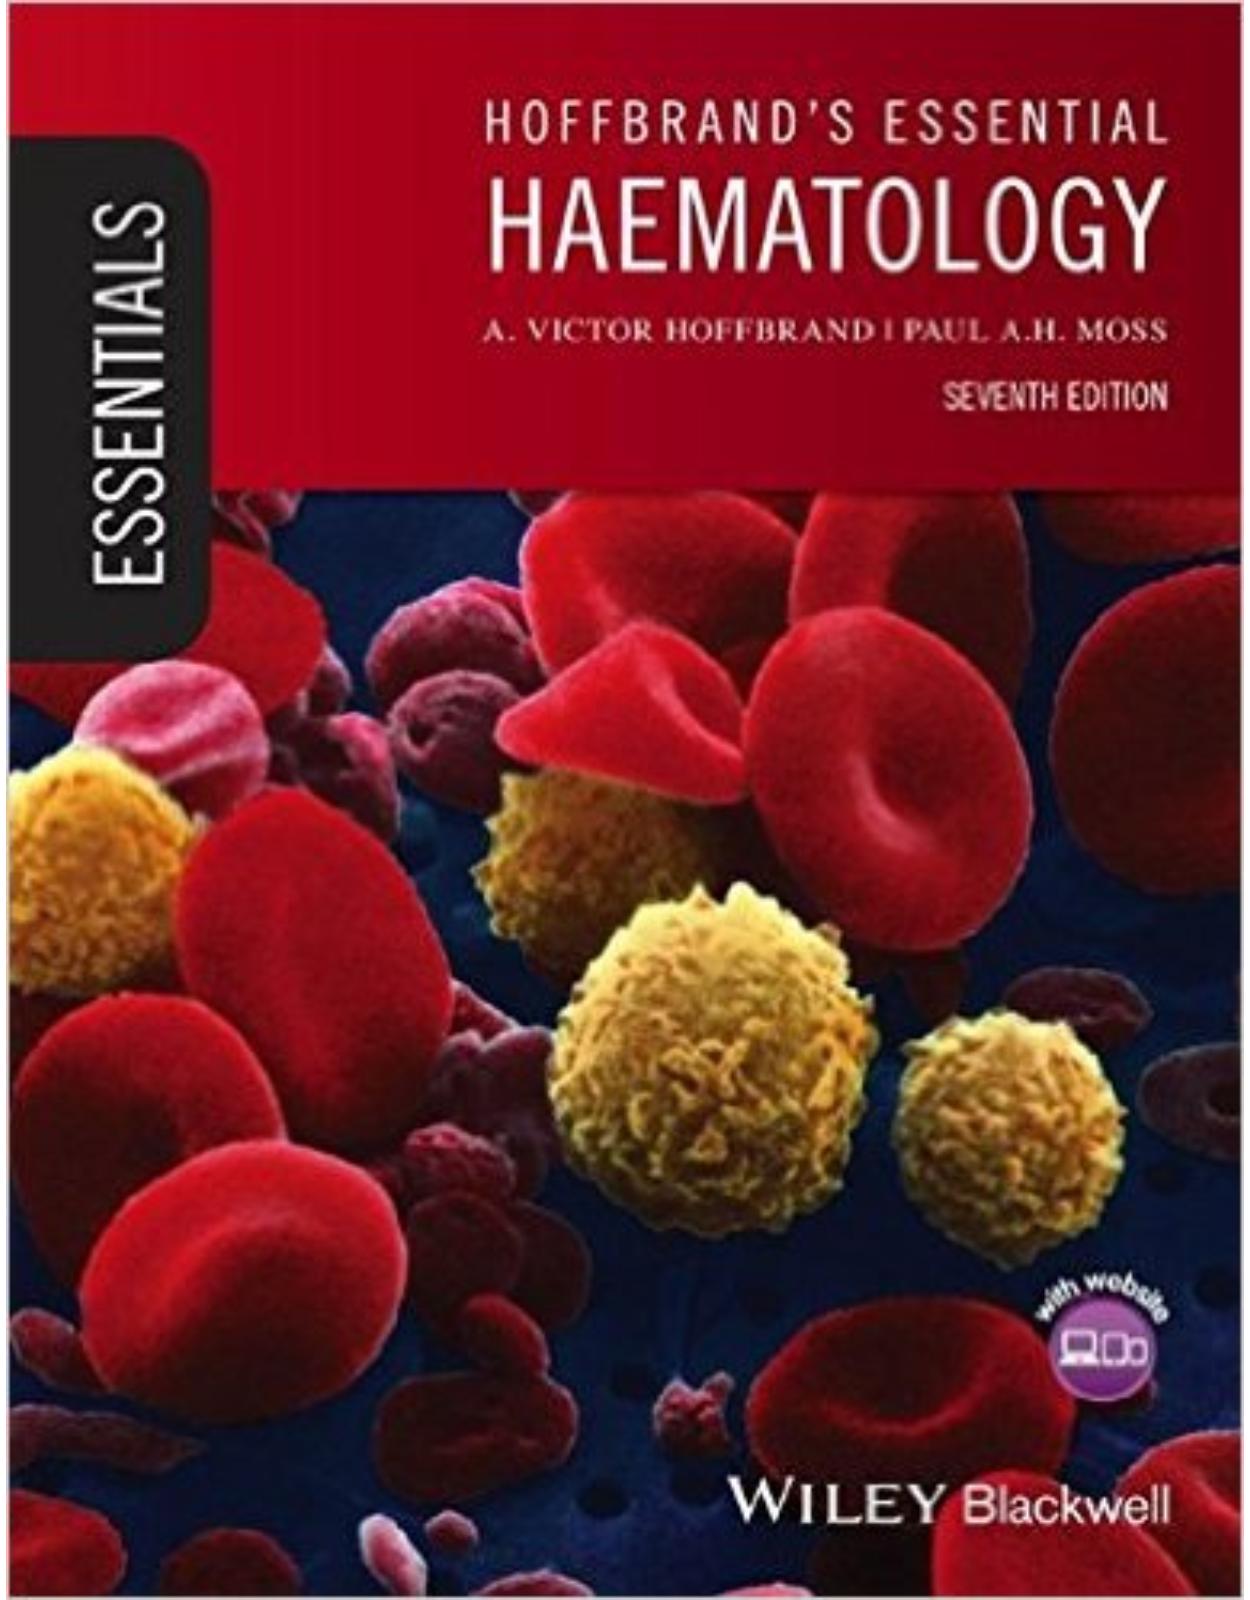 Hoffbrand's Essential Haematology (Essentials) 